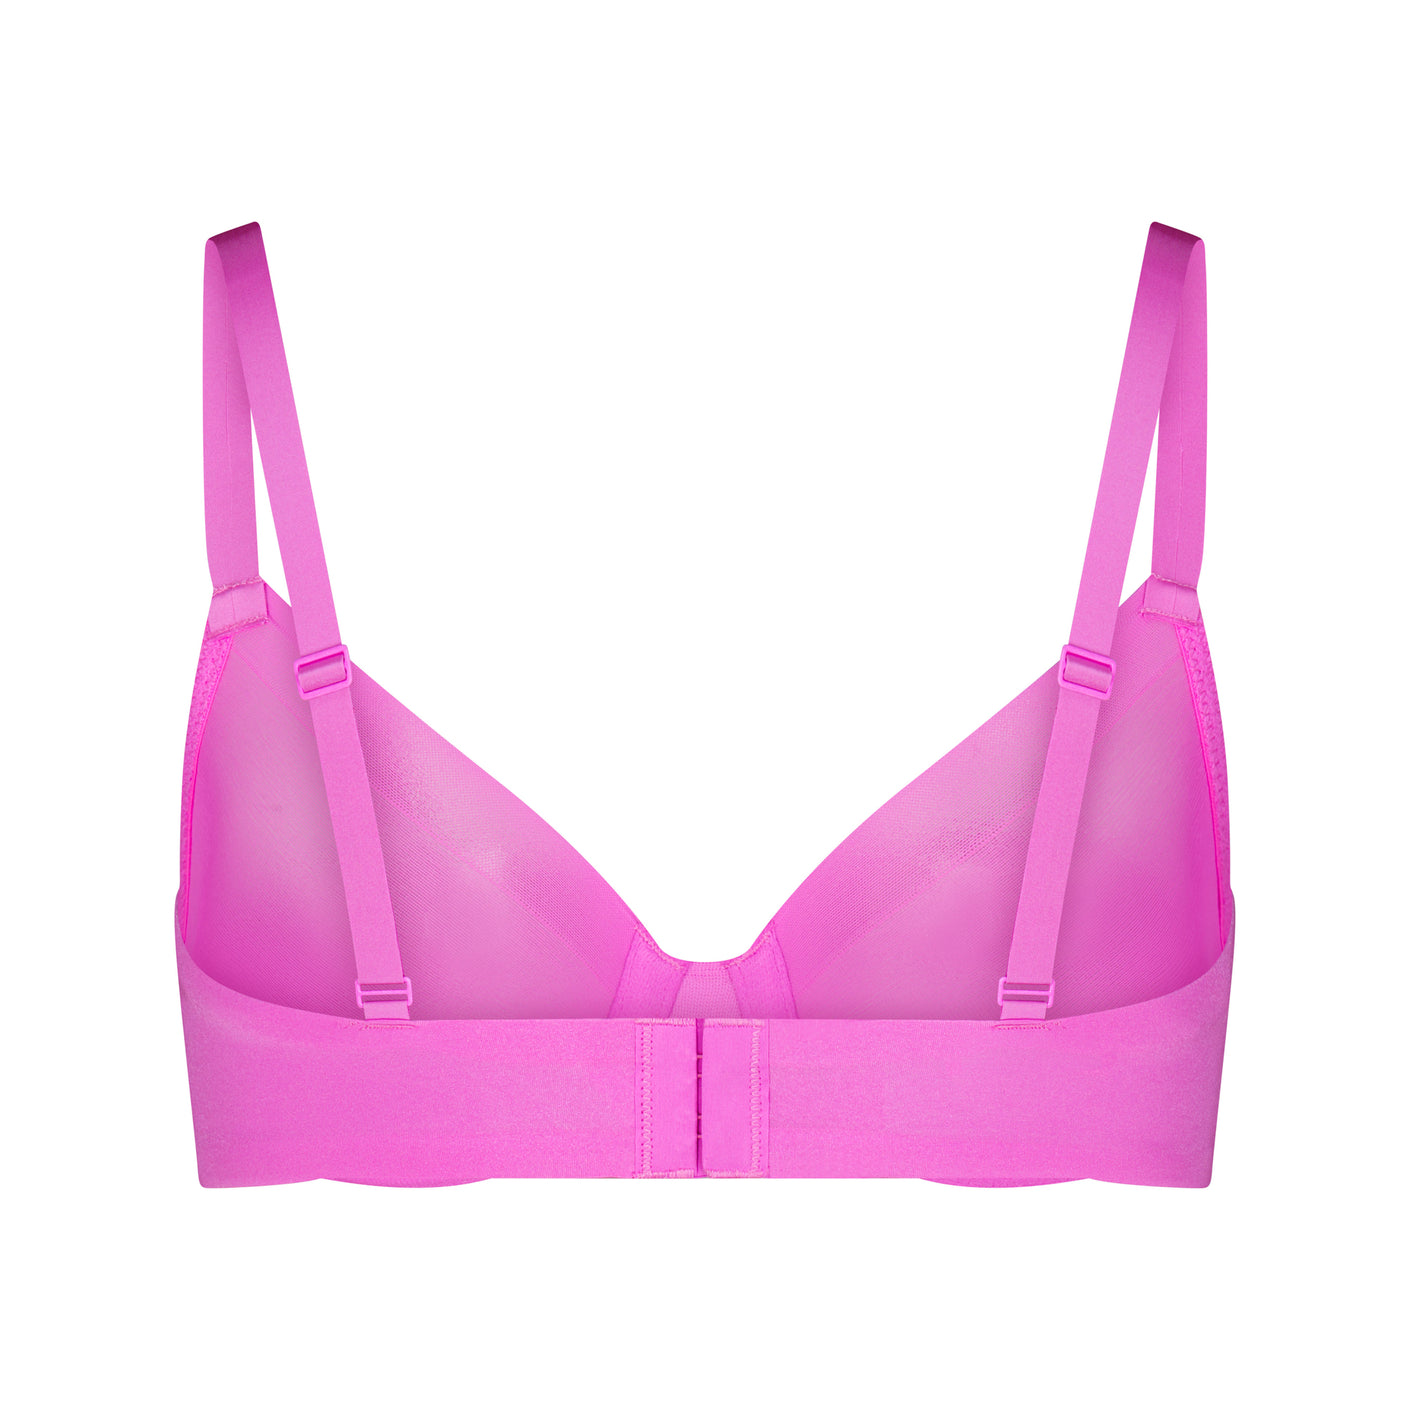 SKIMS Pink Cotton Jersey Underwire Bra Size 26 C - $28 New With